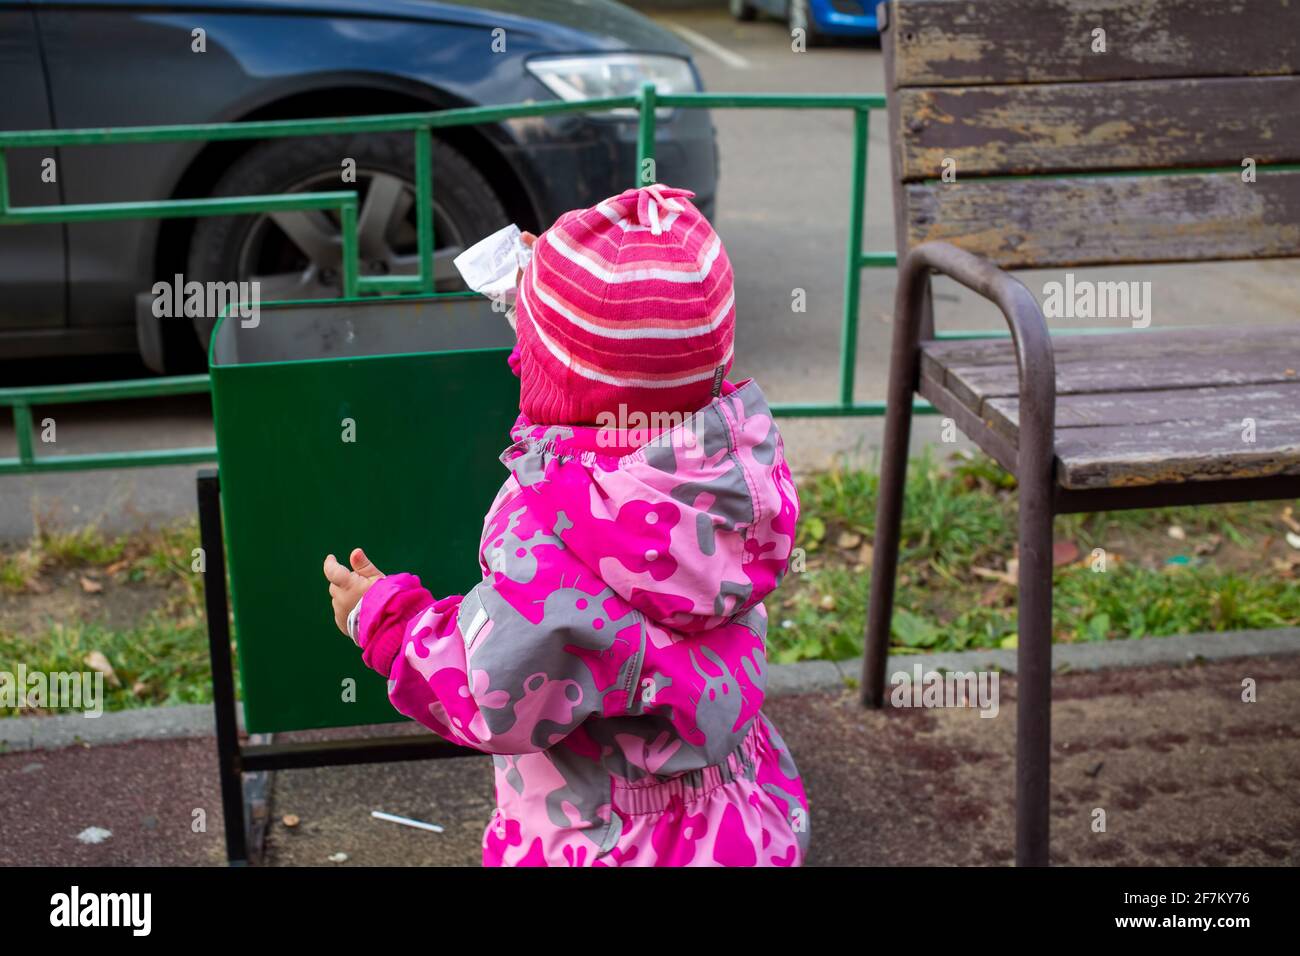 adorable toddler throws trash in a street bin Stock Photo